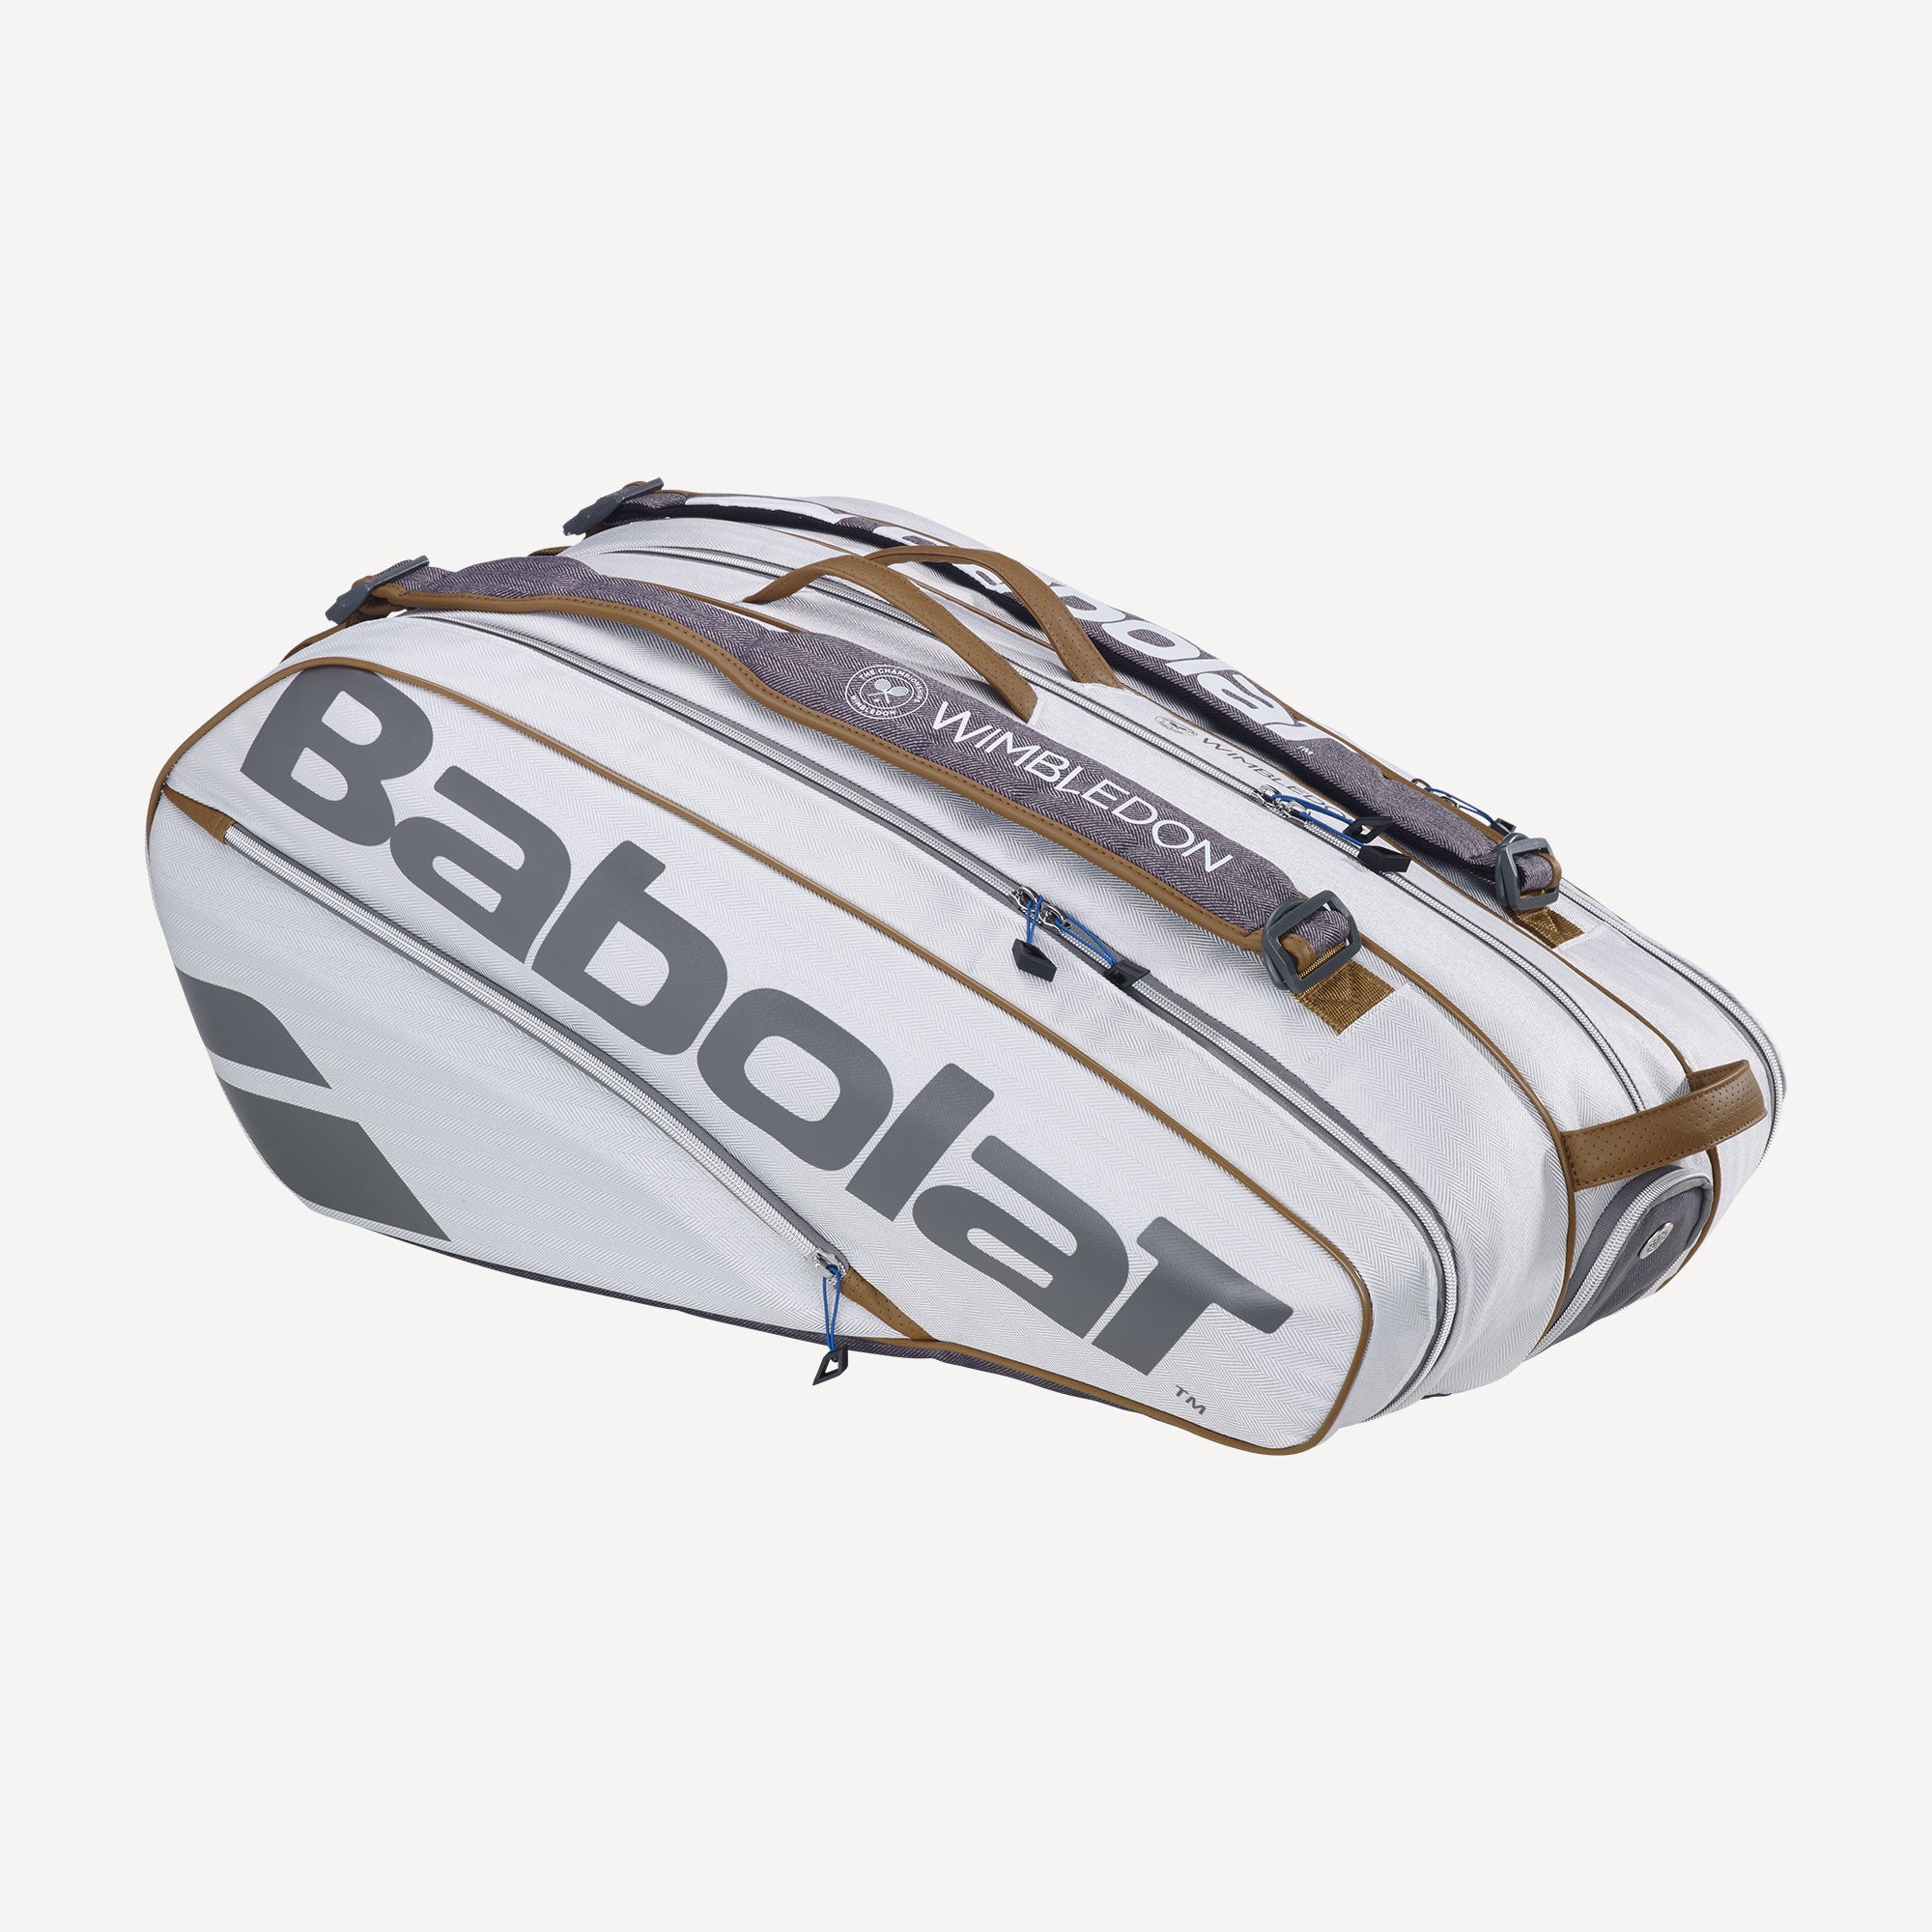 Babolat Pure Wimbledon 9 Racket Tennis Bag - White (1)